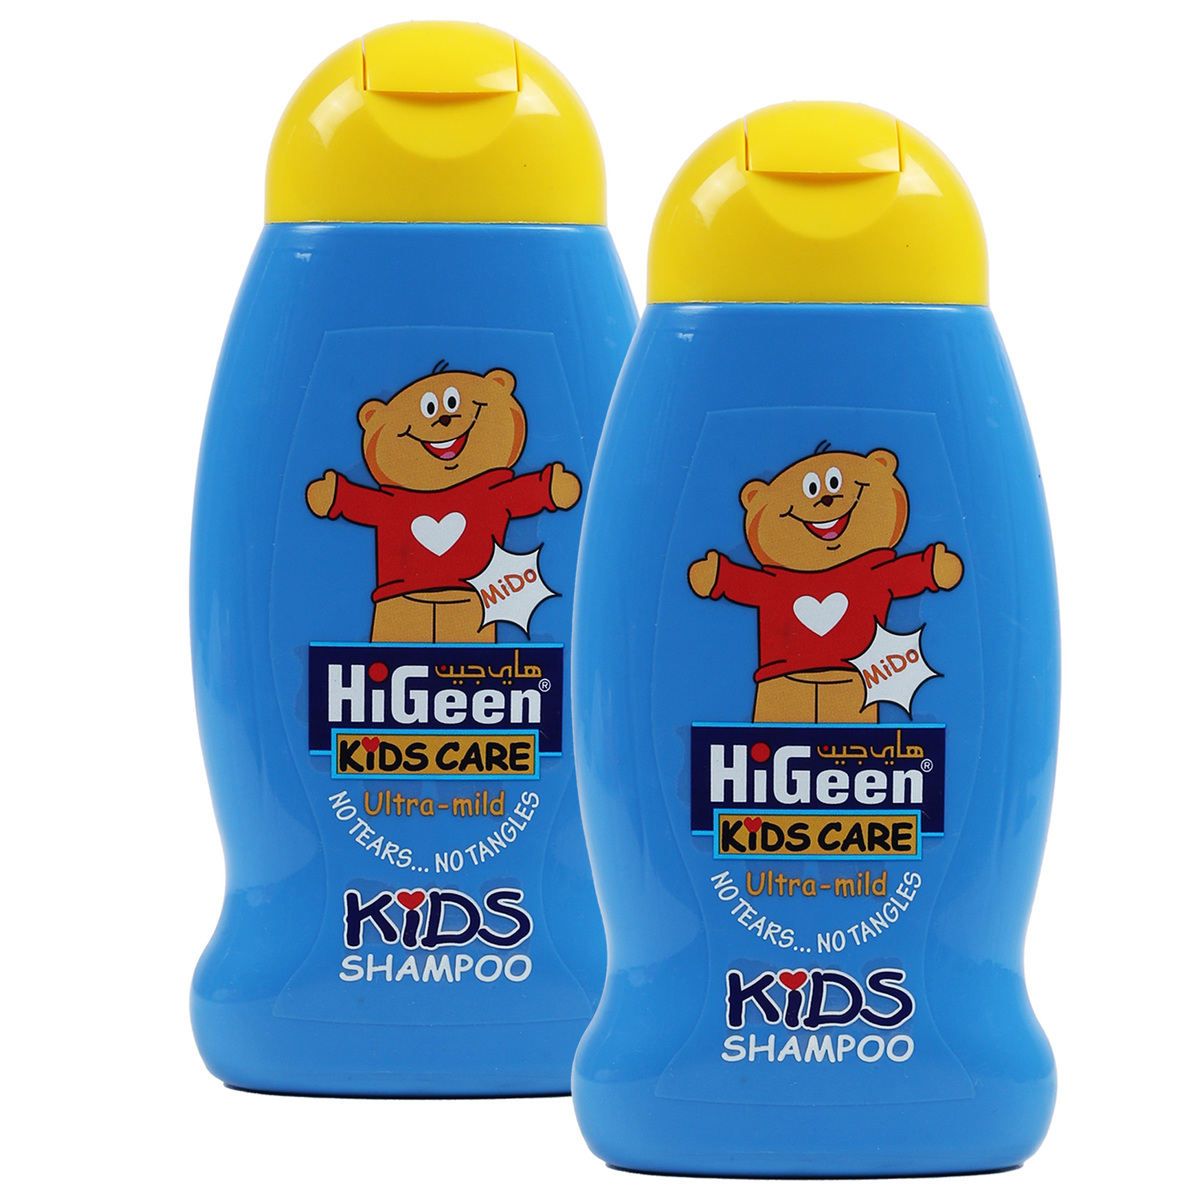 Hi Geen Kids Shampoo Assorted Value Pack 2 x 250ml